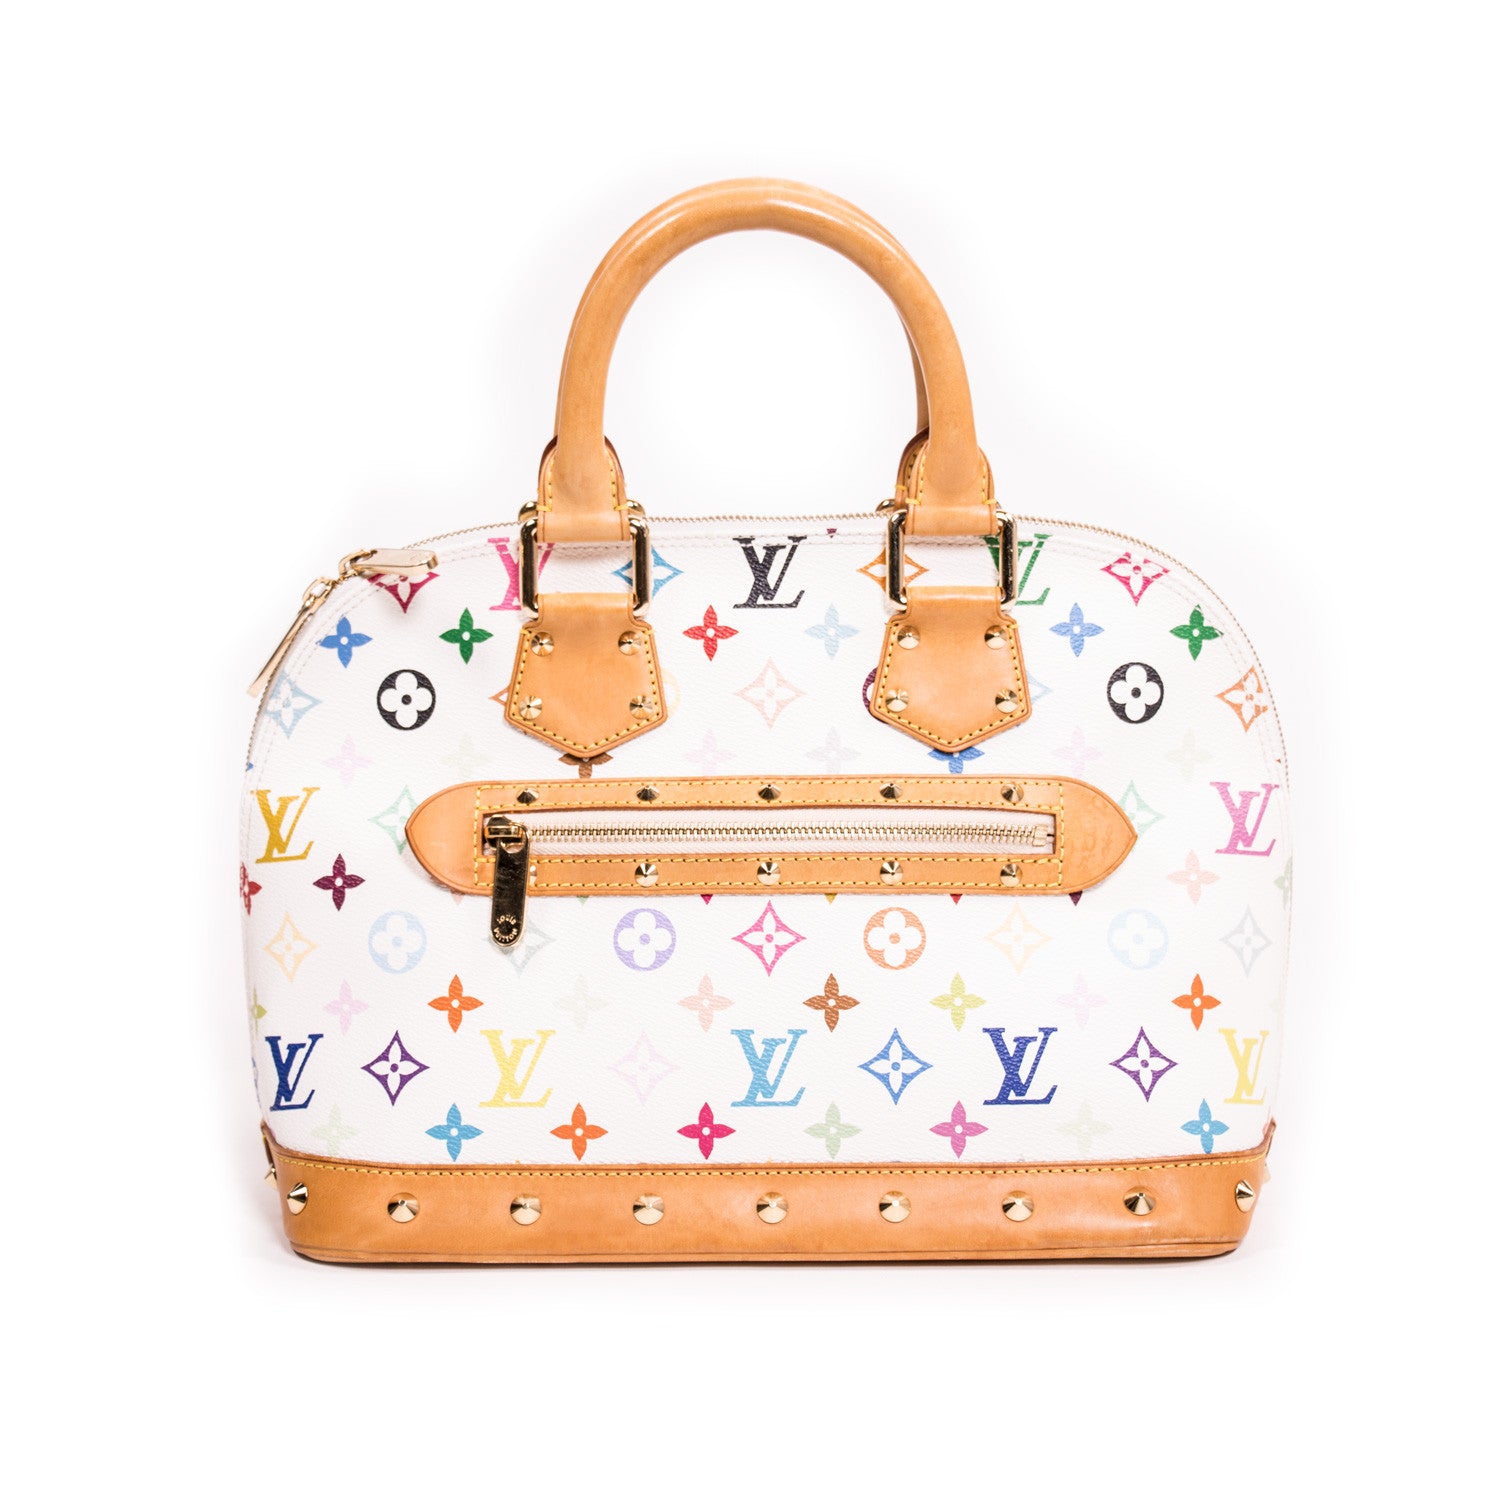 Black Louis Vuitton Monogram Multicolore Alma PM Handbag